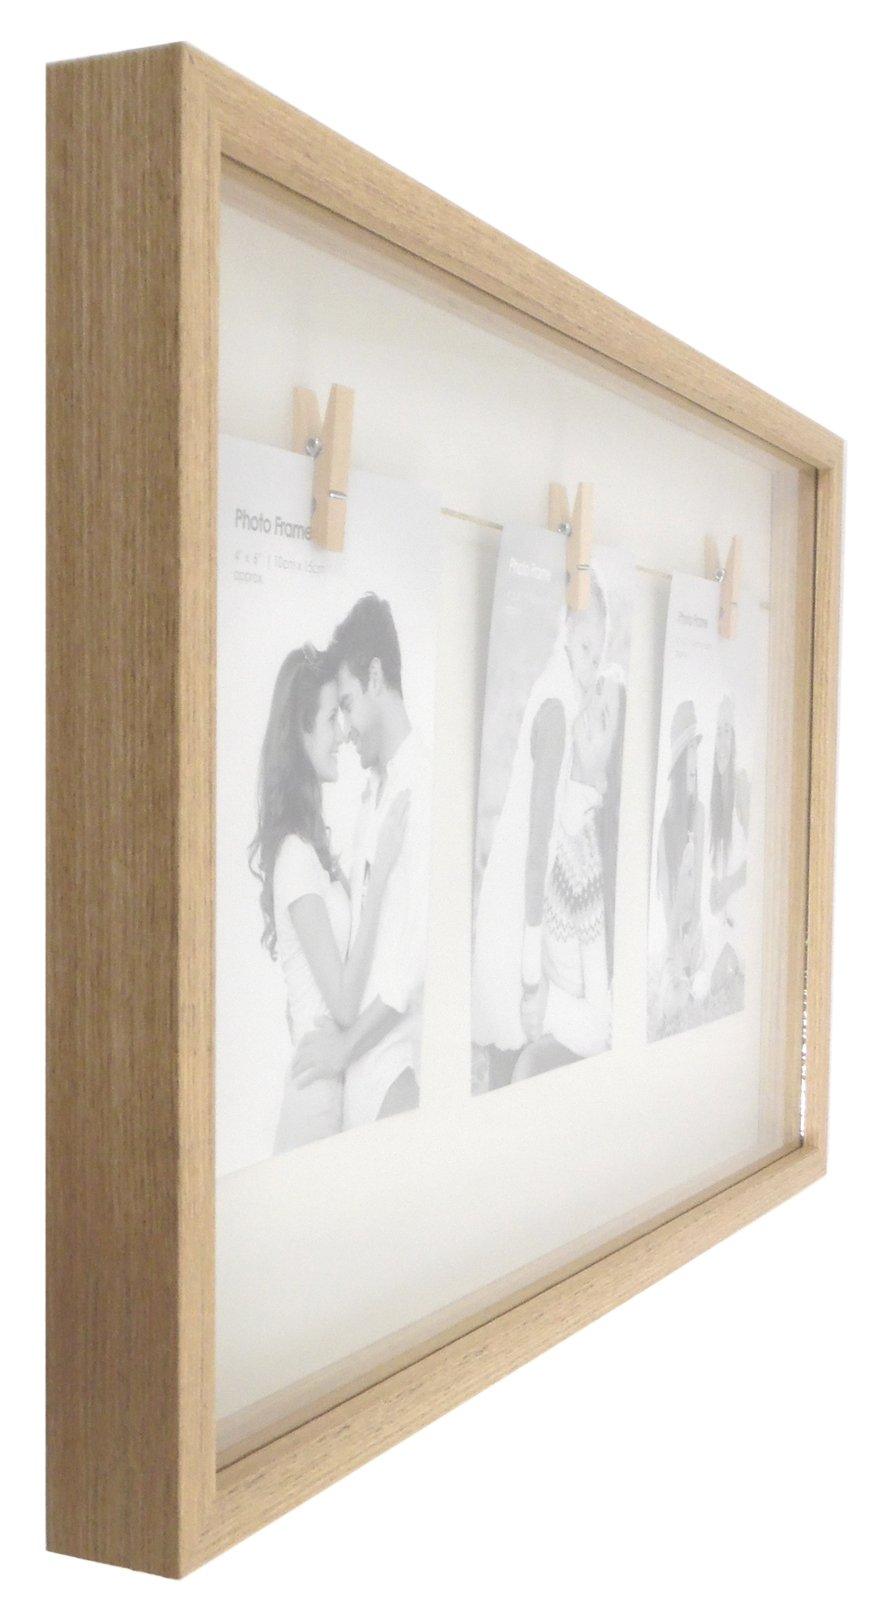 White Natural Wood Triple Peg Frame - £22.99 - Photo Frames 